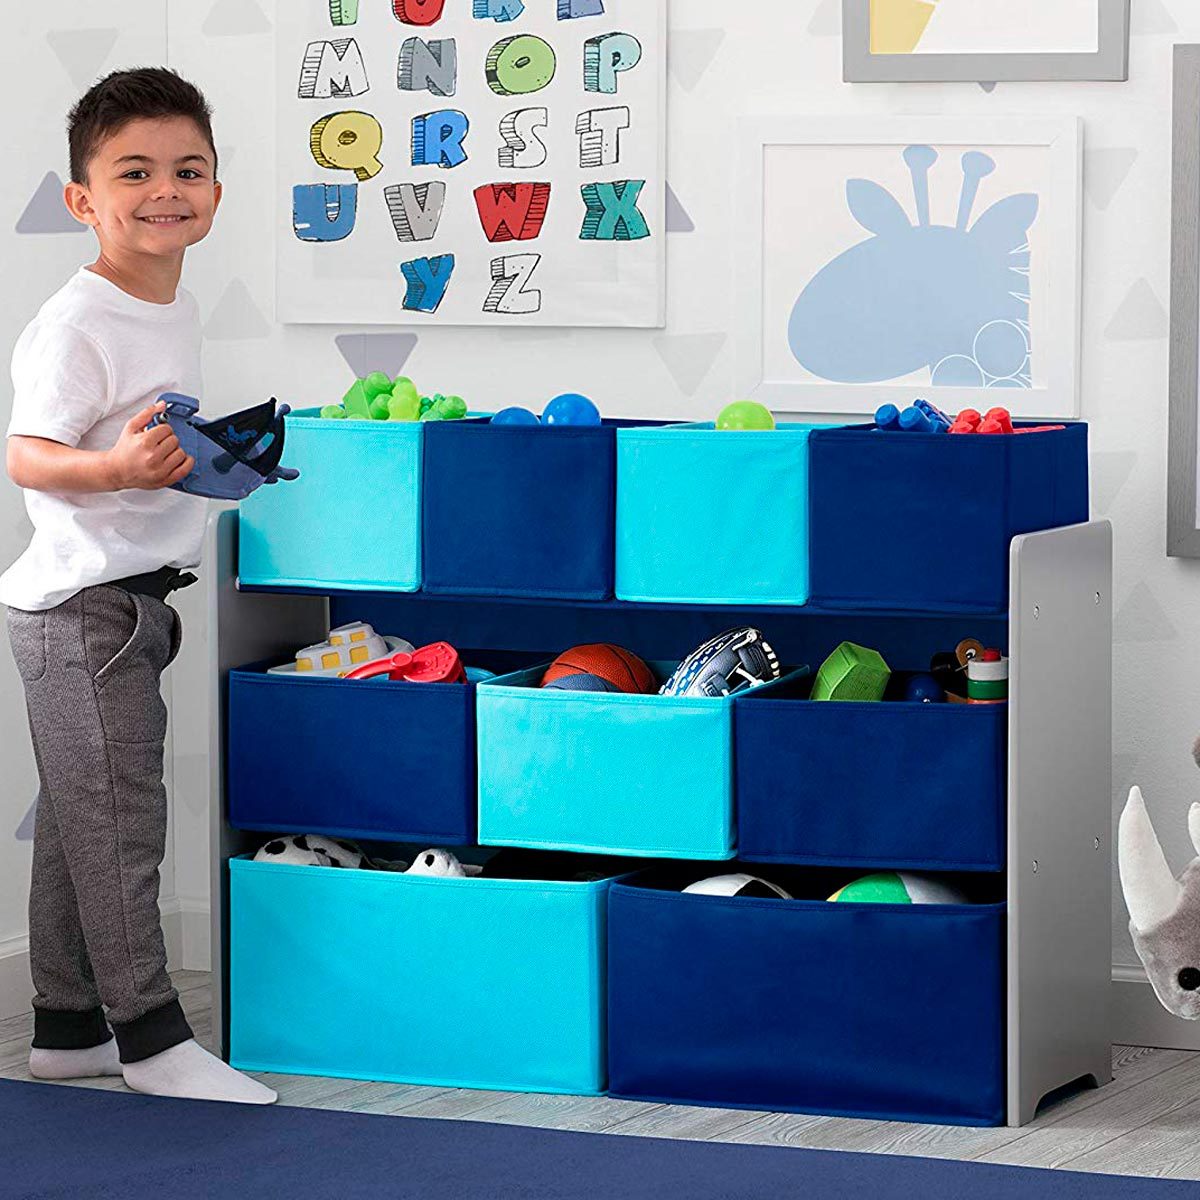 14 Small Kids Room Design Ideas & Storage Tips 🧸